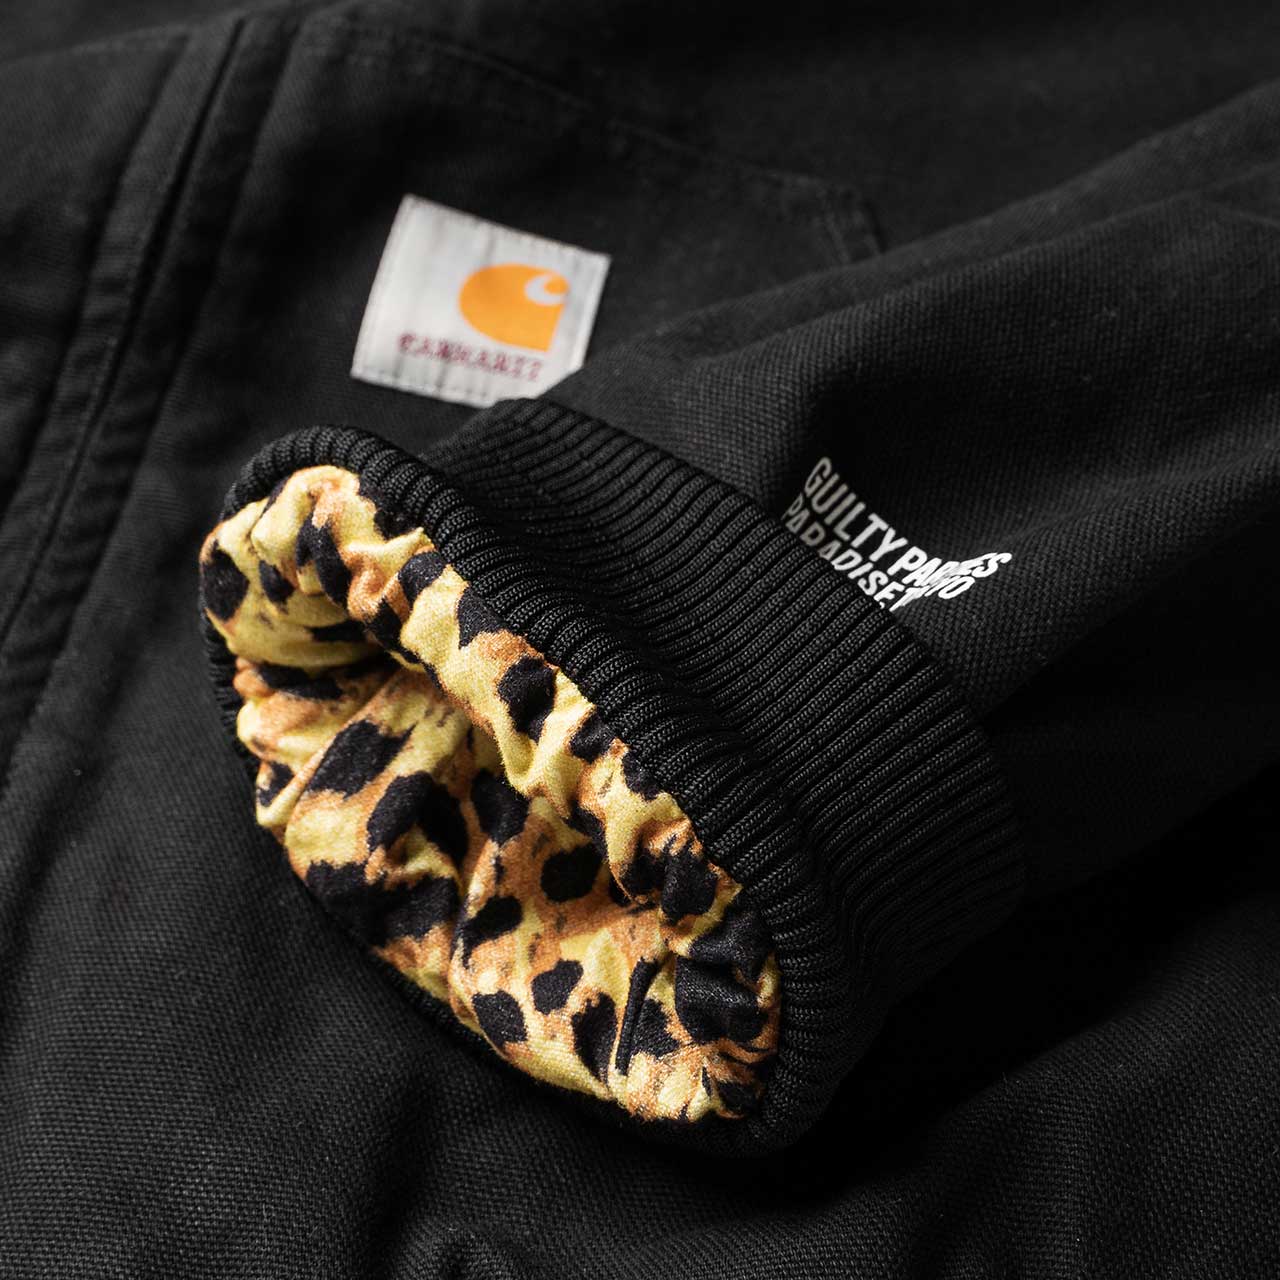 carhartt wip x wacko maria og active jacket (black / leopard print)  I028198.0D6.02.03 - a.plus